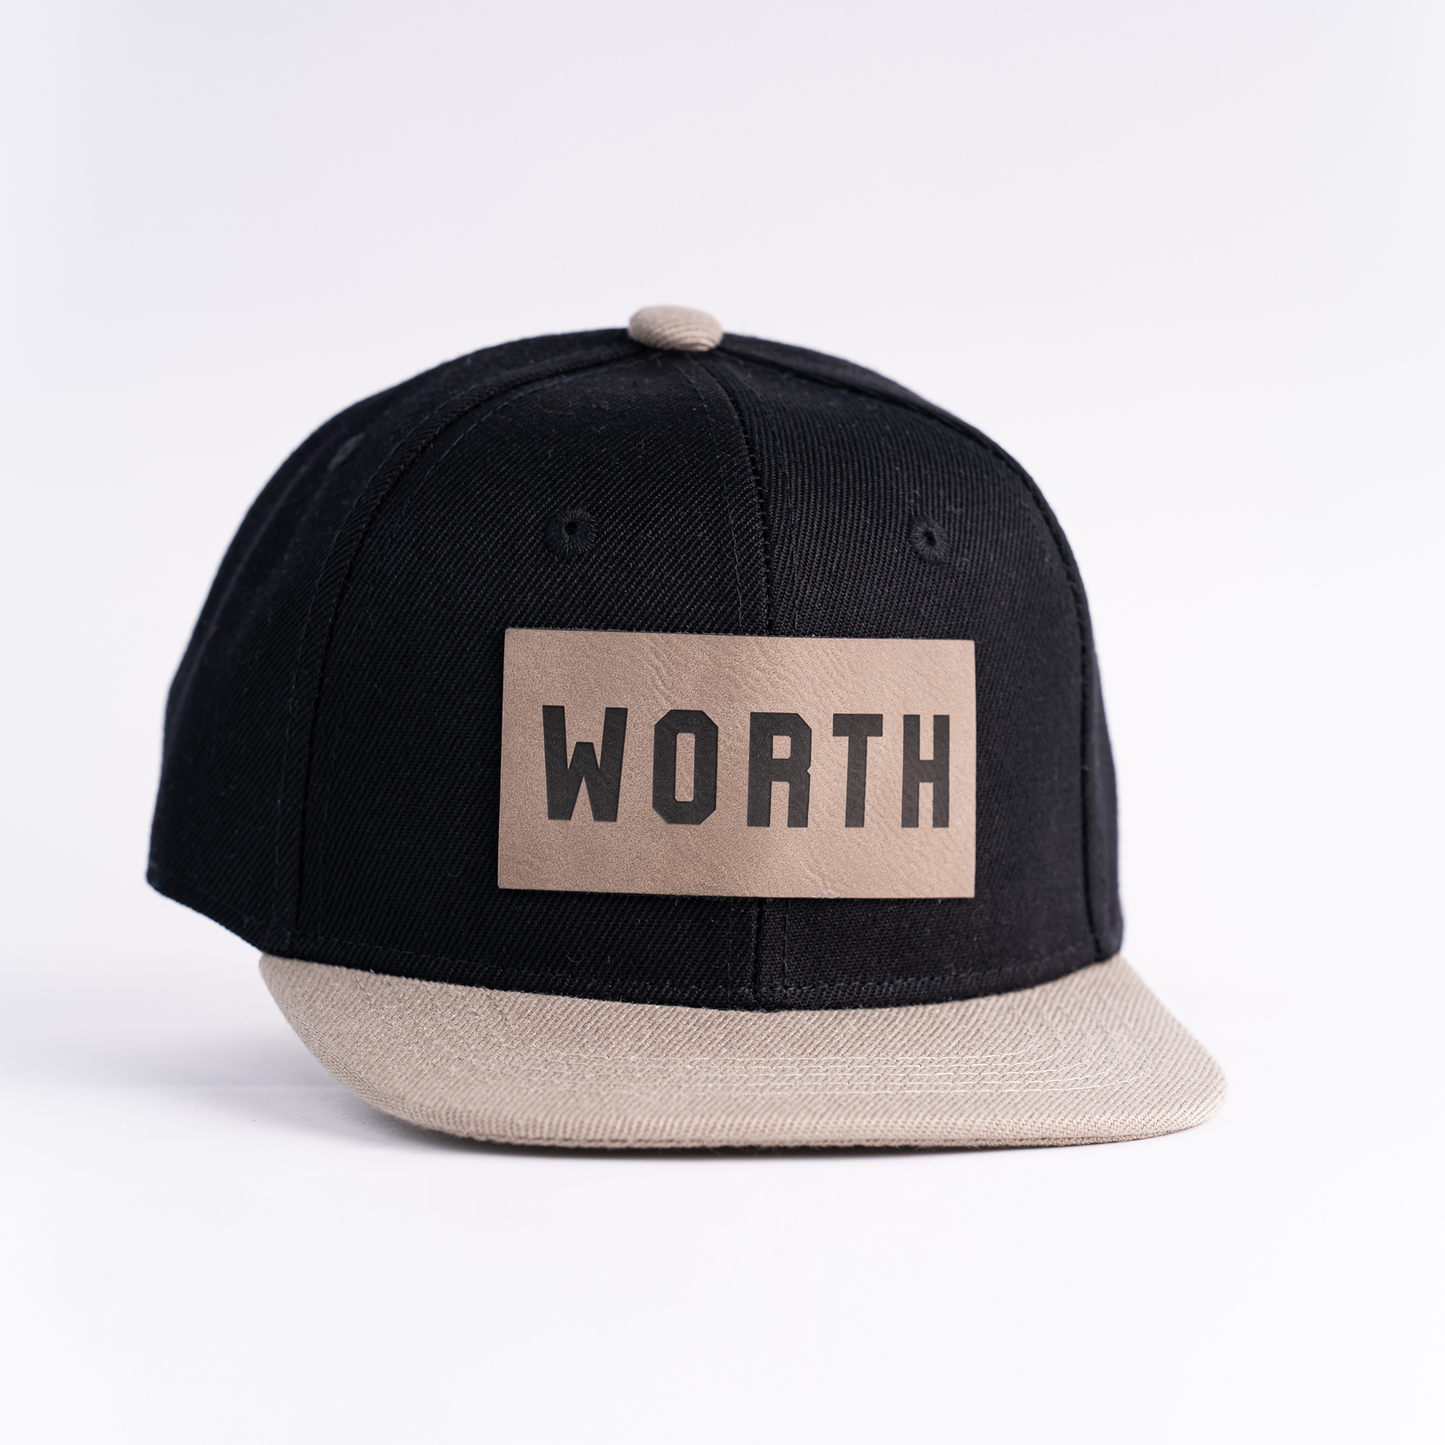 WORTH (Leather Custom Name Patch) - Kids Trucker Hat (Black/Khaki)